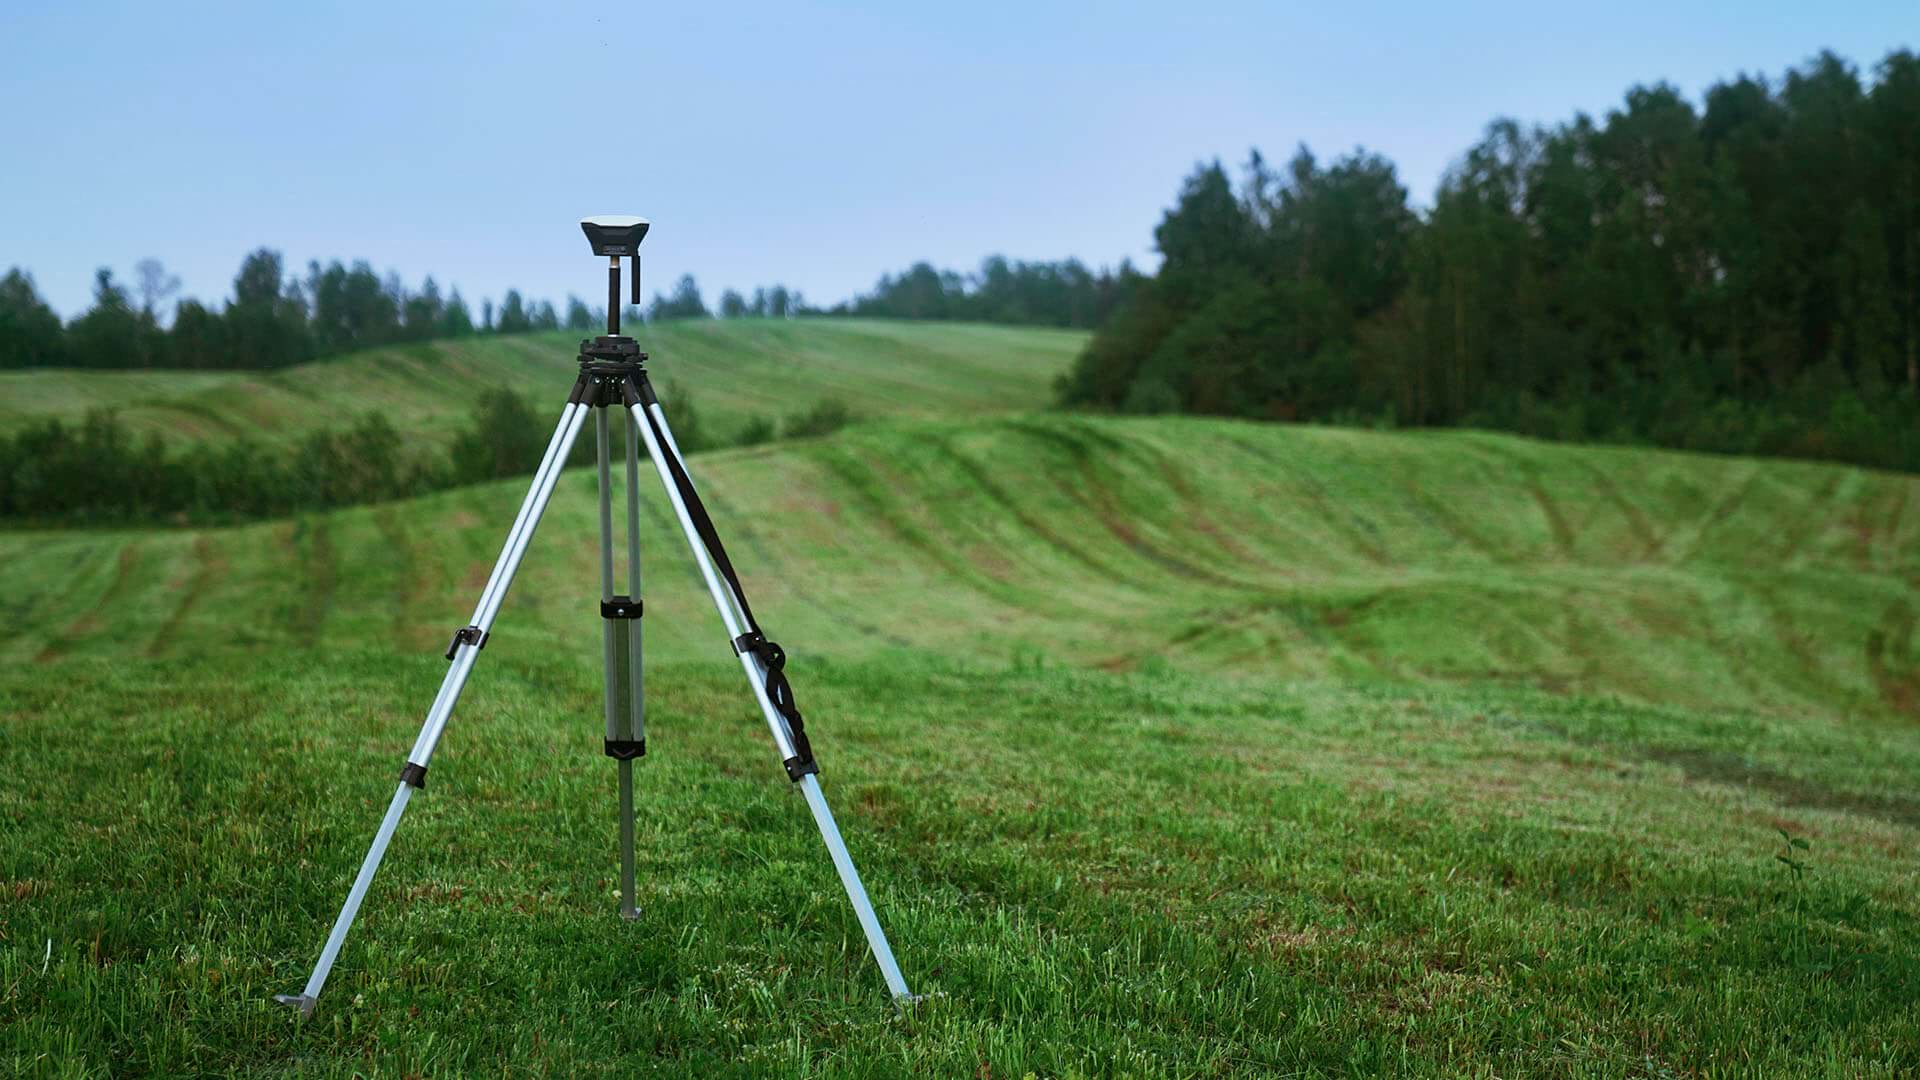 Measuring equipment on a tripod in a green rolling field